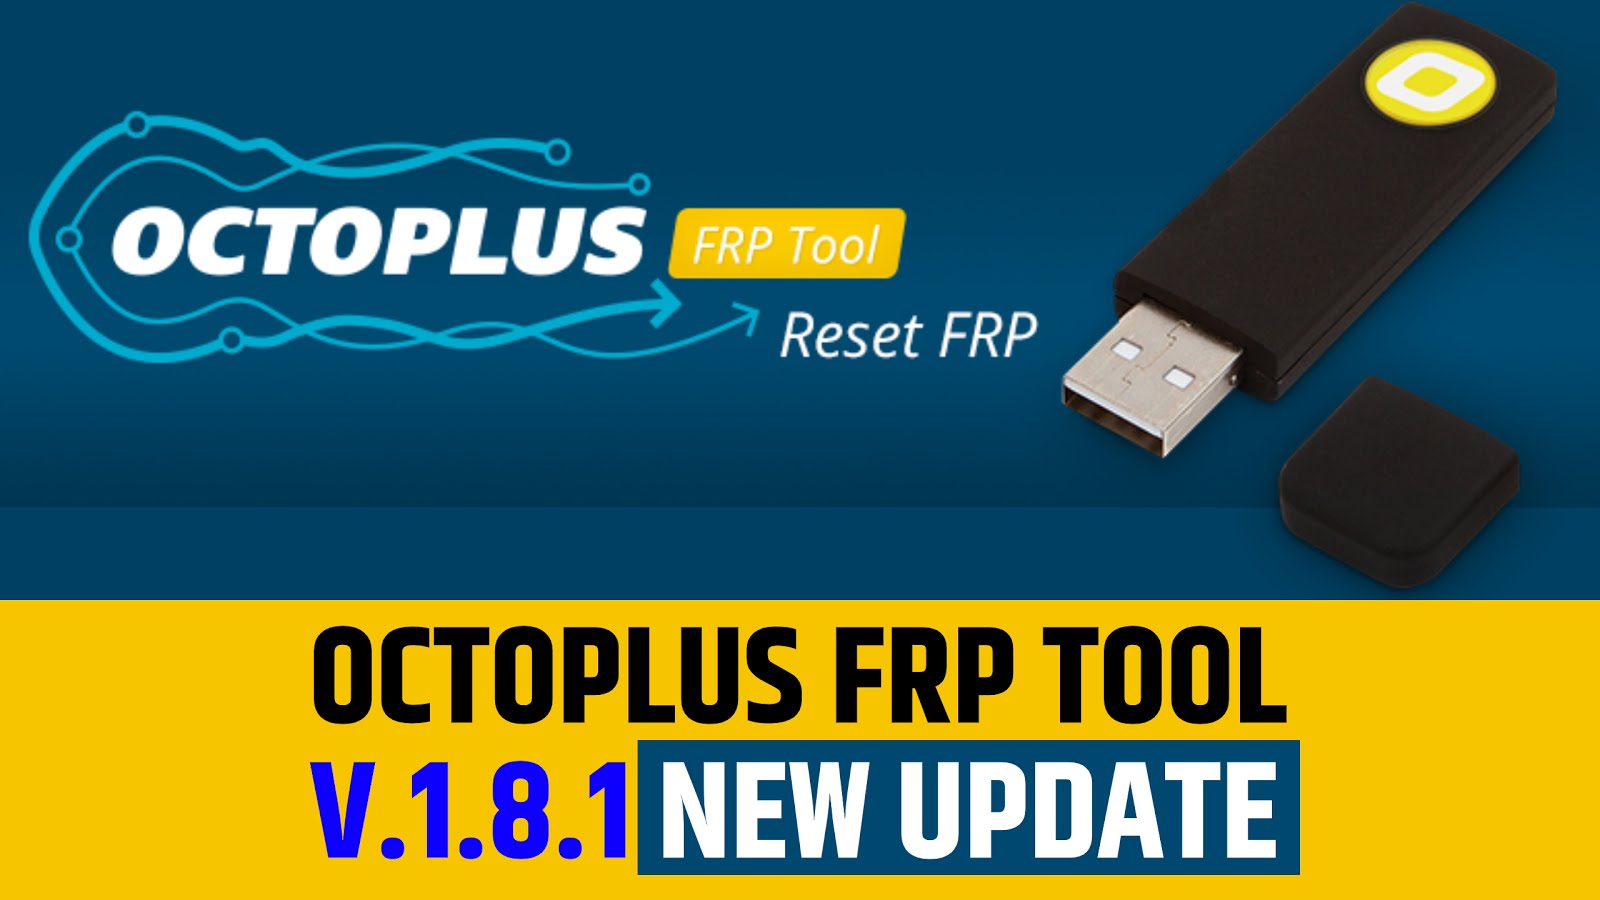 Octoplus tool. Octoplus. FRP Tool. FRP Octoplus Samsung п960а. Octopus FRP Tool v 2.1.8.1.